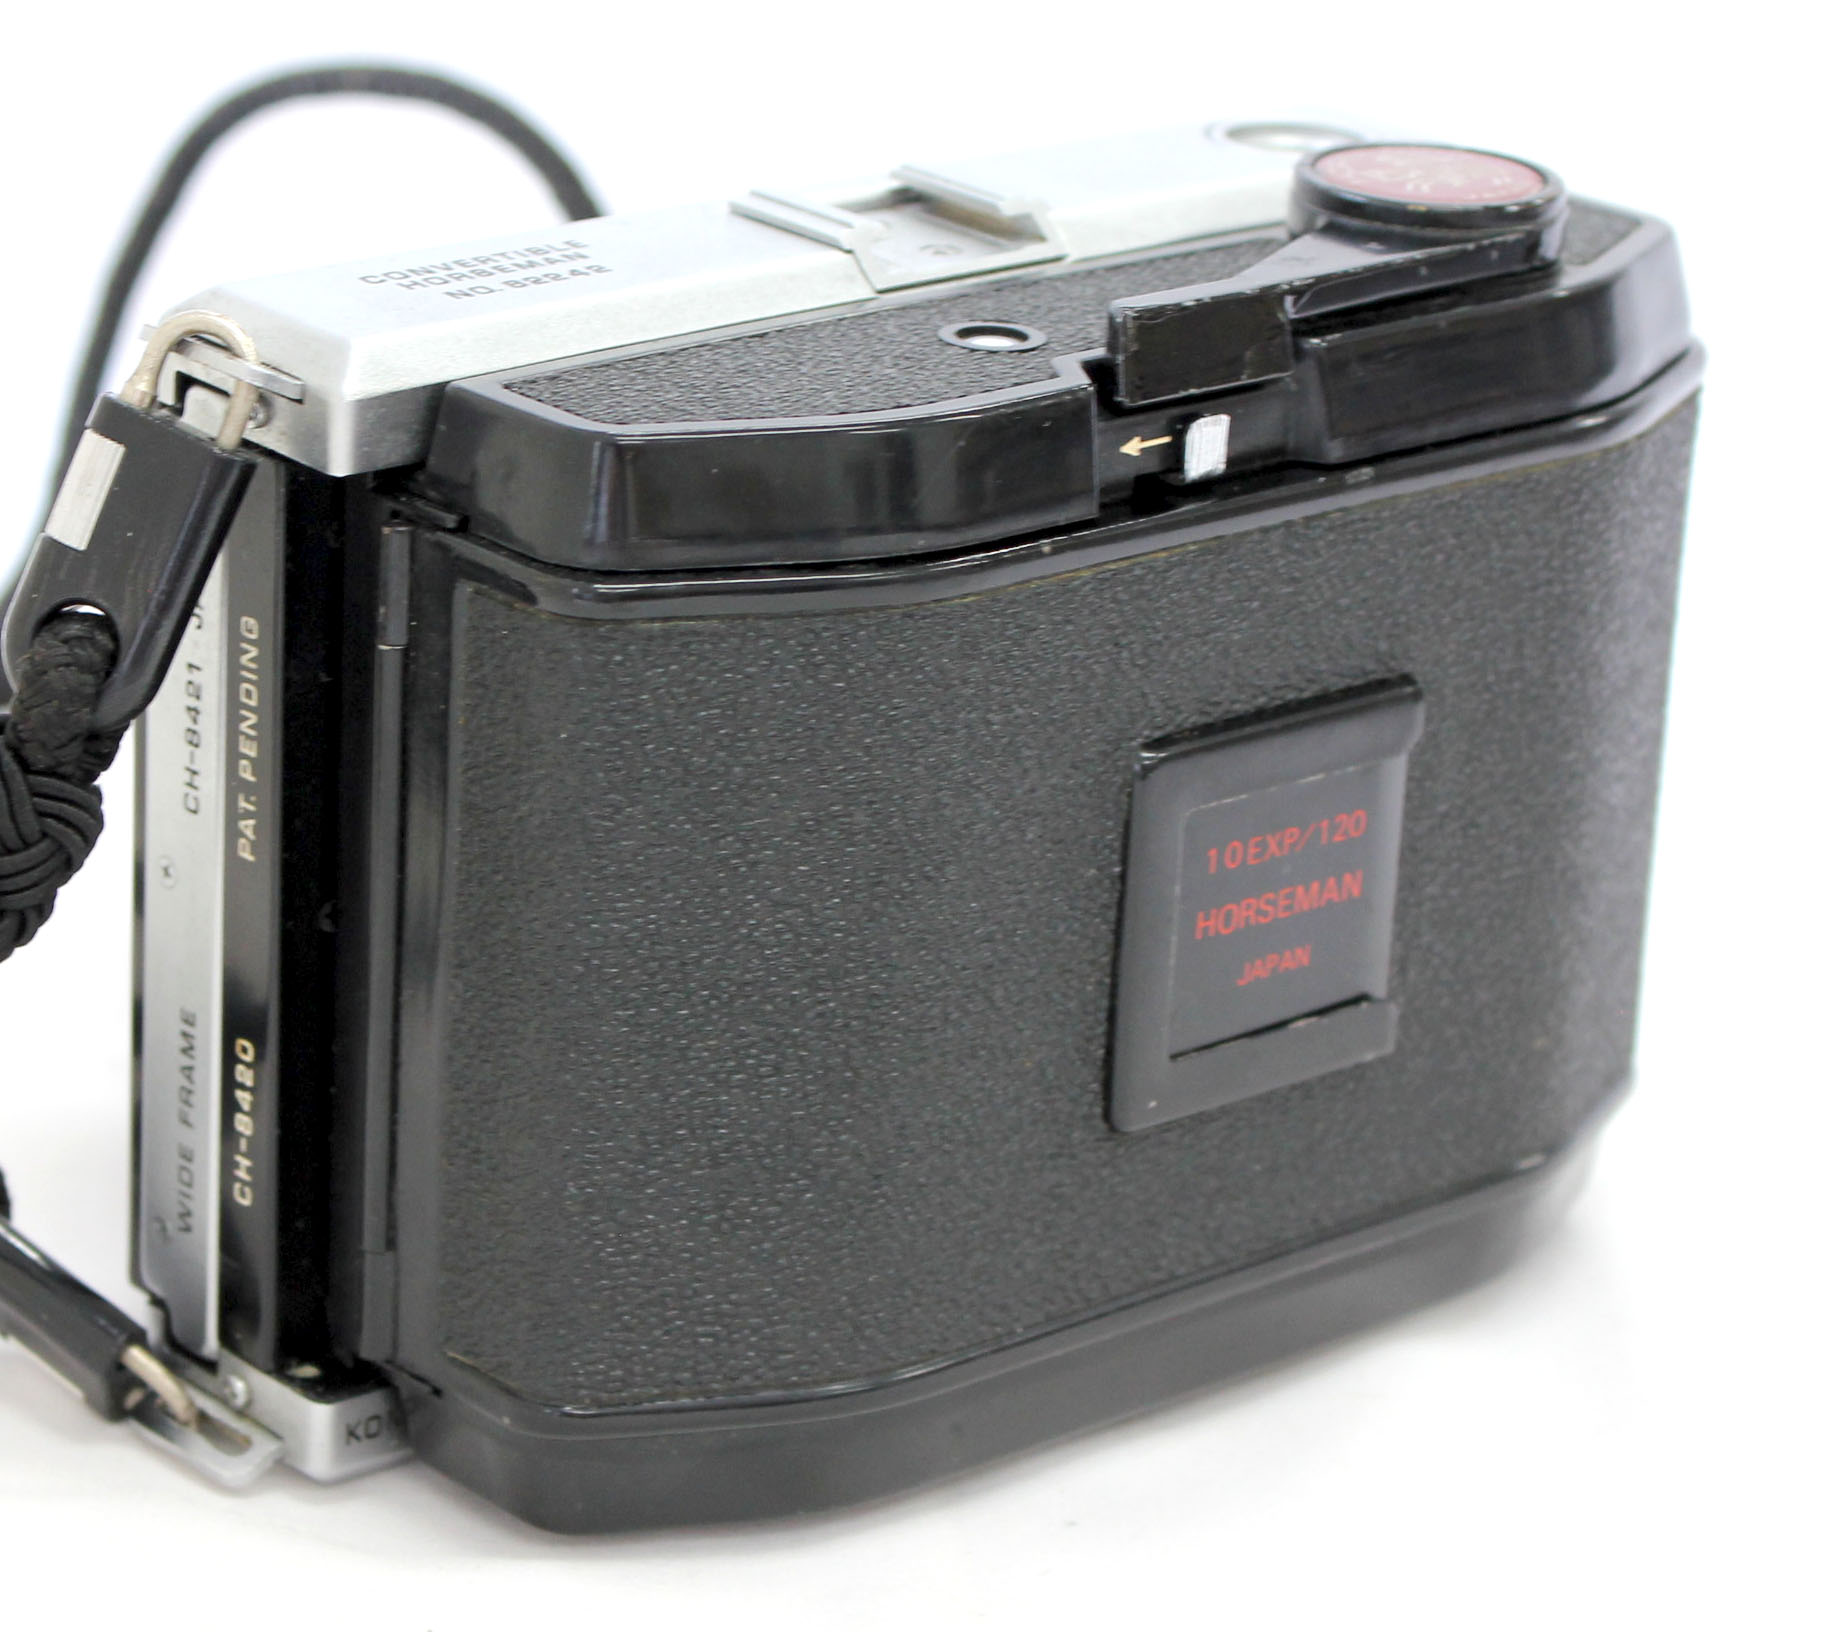 Horseman Convertible Medium Format Camera w/ 62mm F/5.6, 10EXP/120 Holder from Japan Photo 3